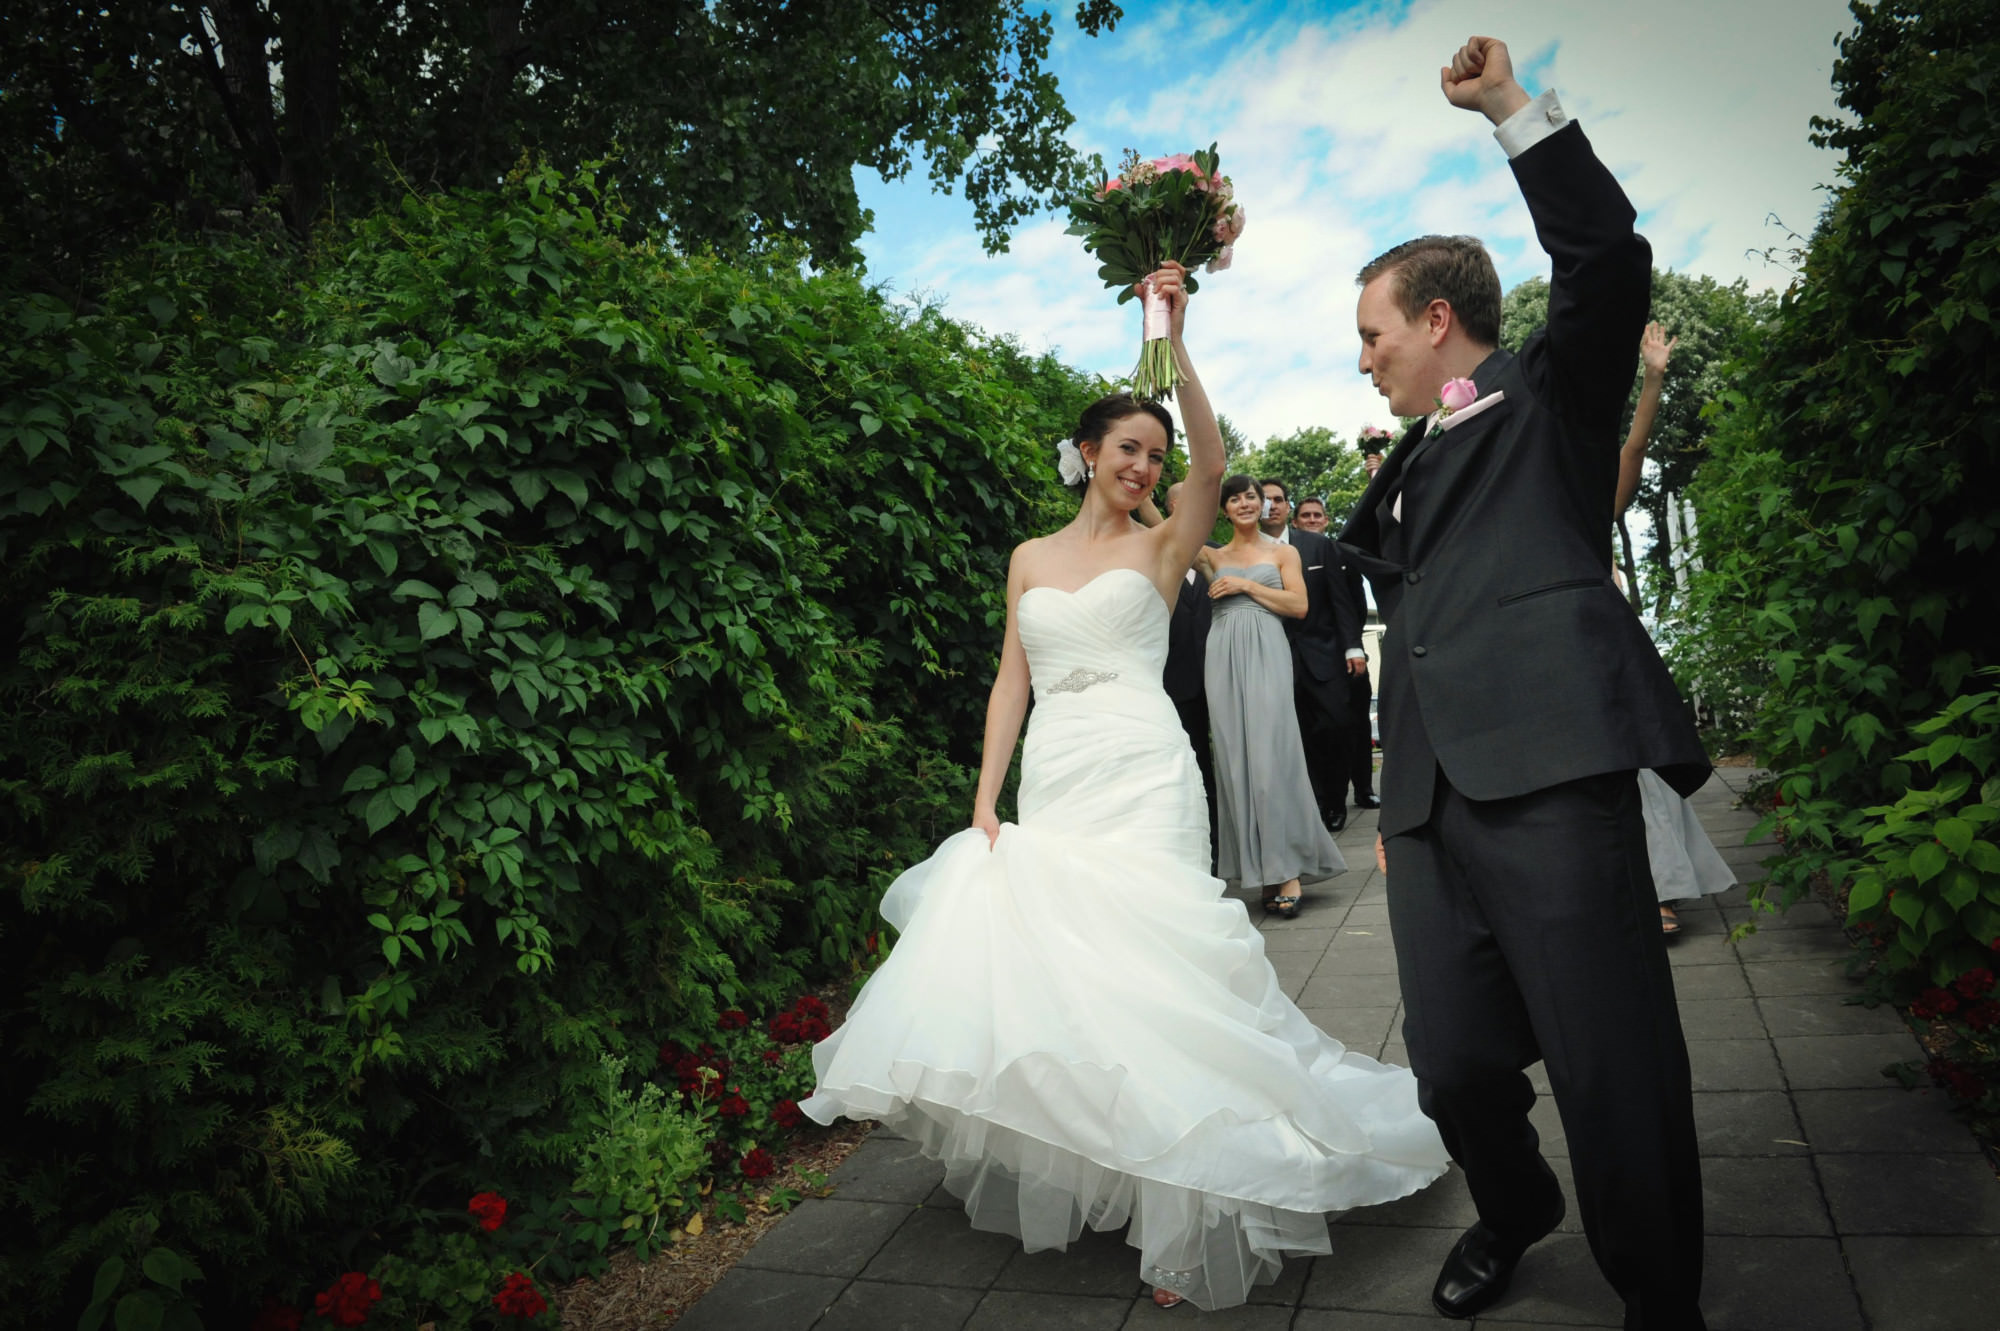 lavimage wedding photography vera varley alesya kornetskaya outdoor wedding 